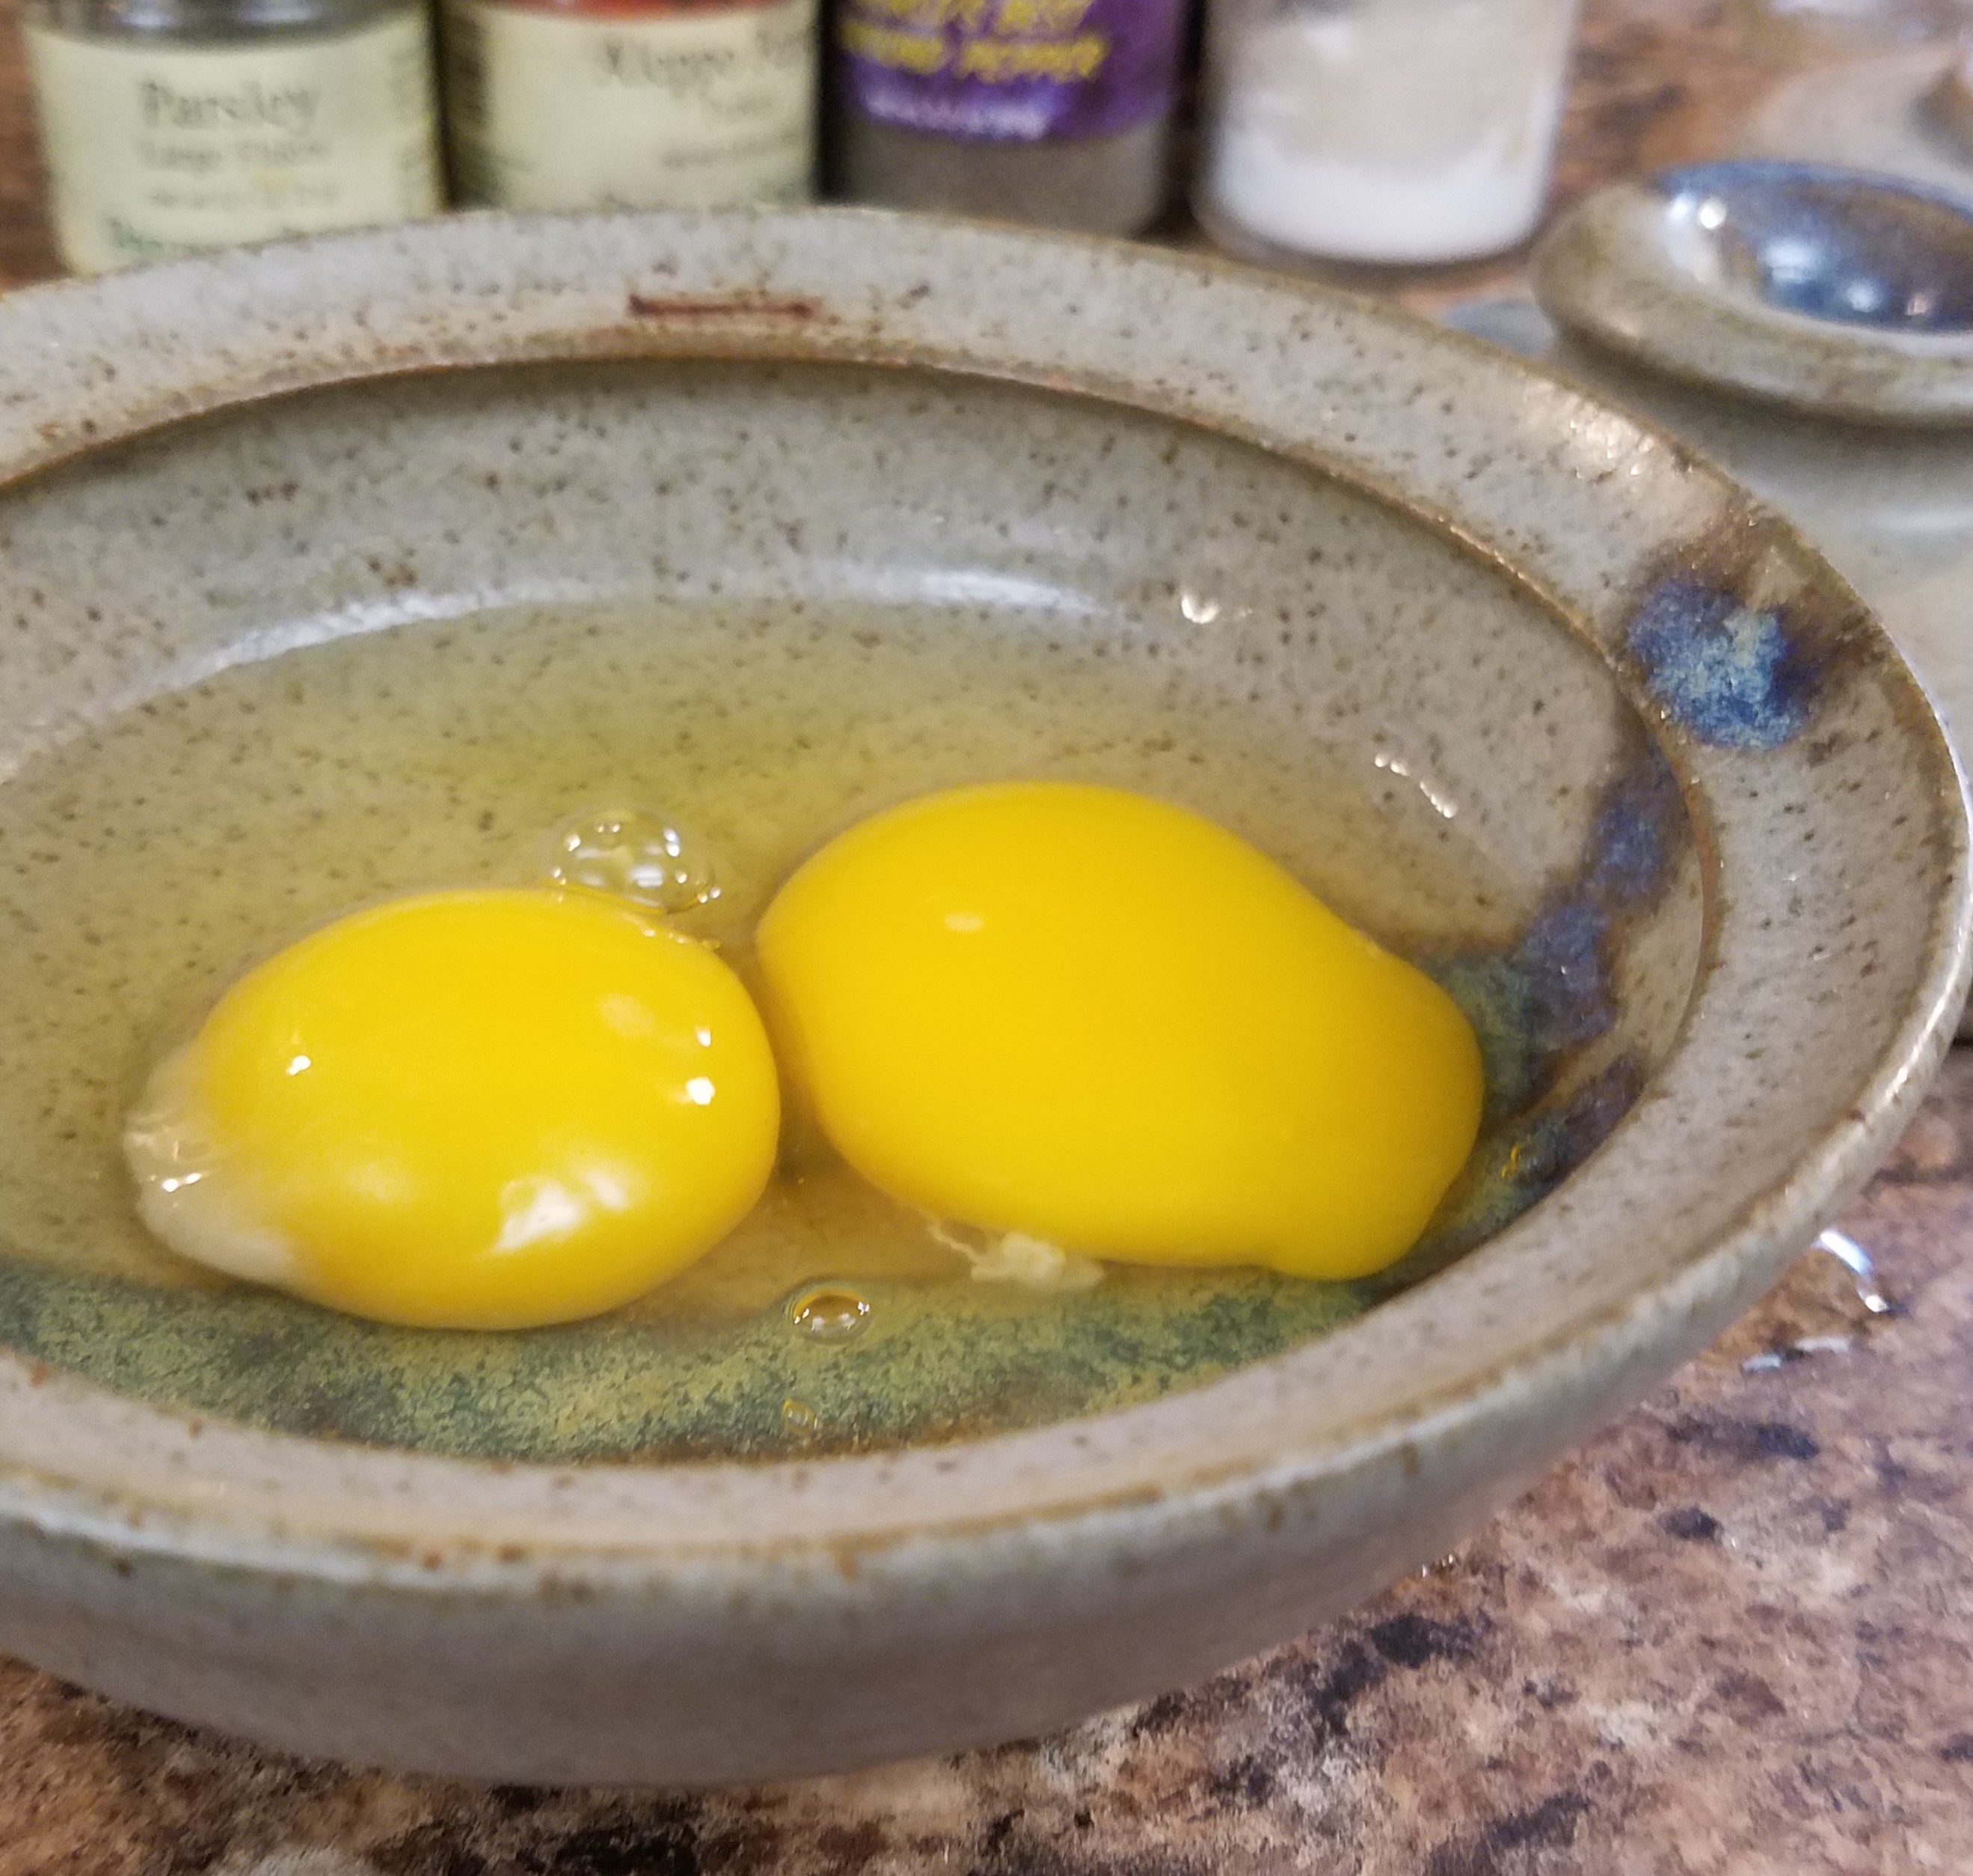 https://newclaypottery.com/wp-content/uploads/2019/05/Cook-Egg-Micro220190705_142134.jpg